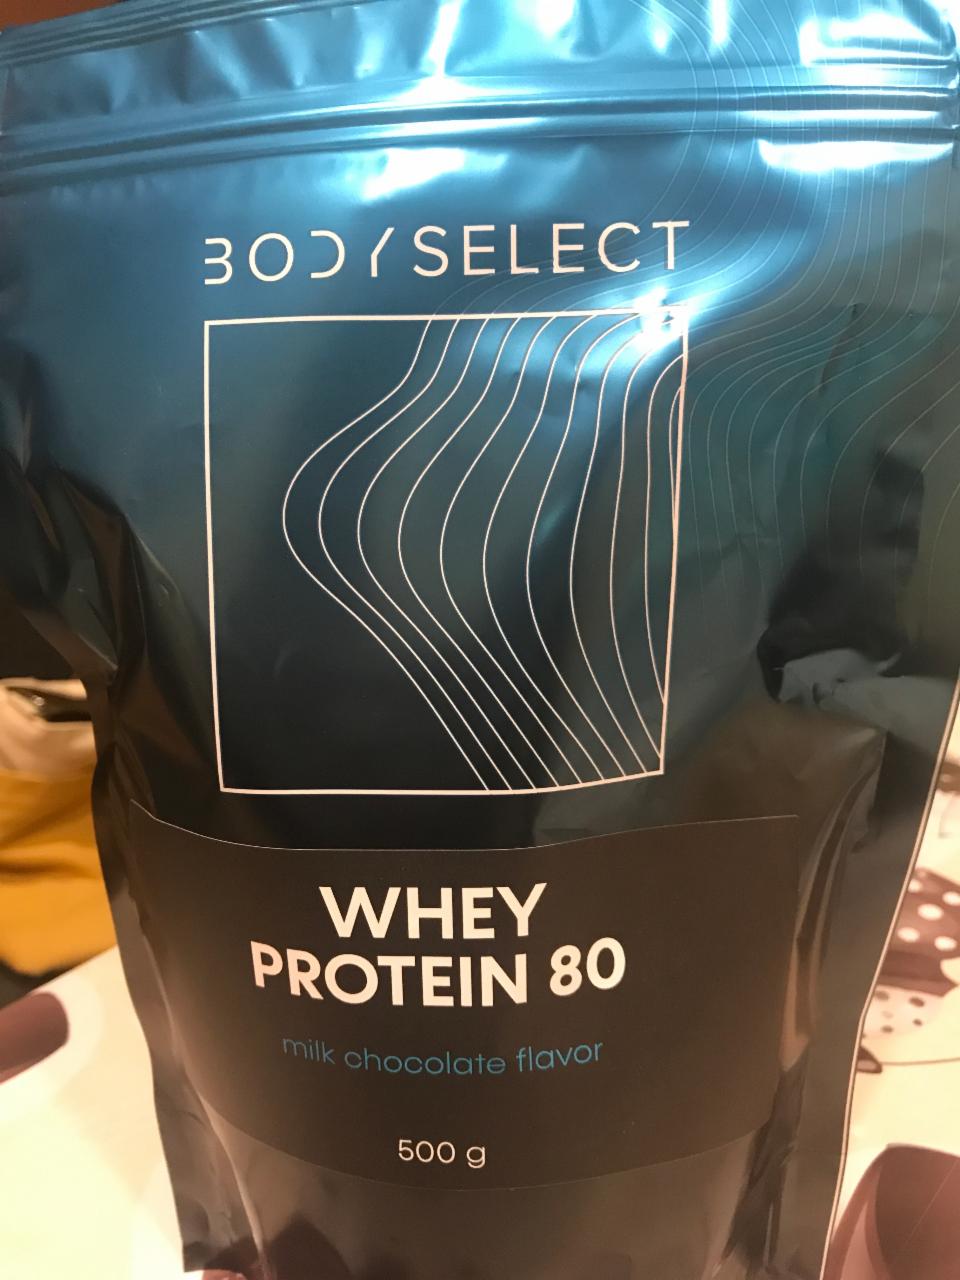 Képek - Whey protein 80 milk chocolate flavor Body select